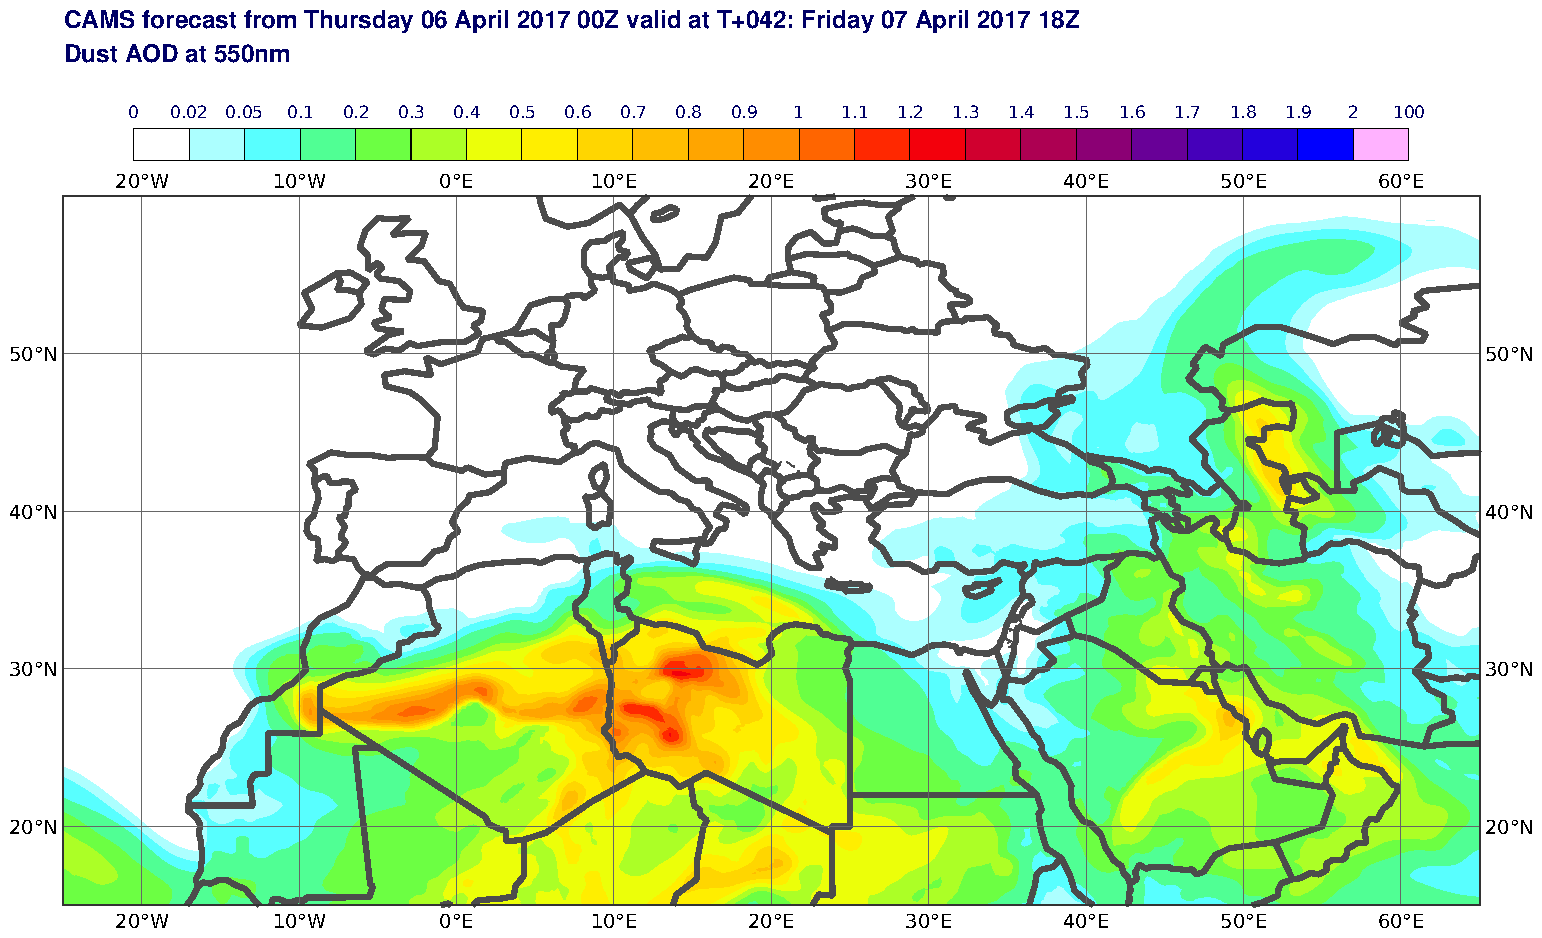 Dust AOD at 550nm valid at T42 - 2017-04-07 18:00